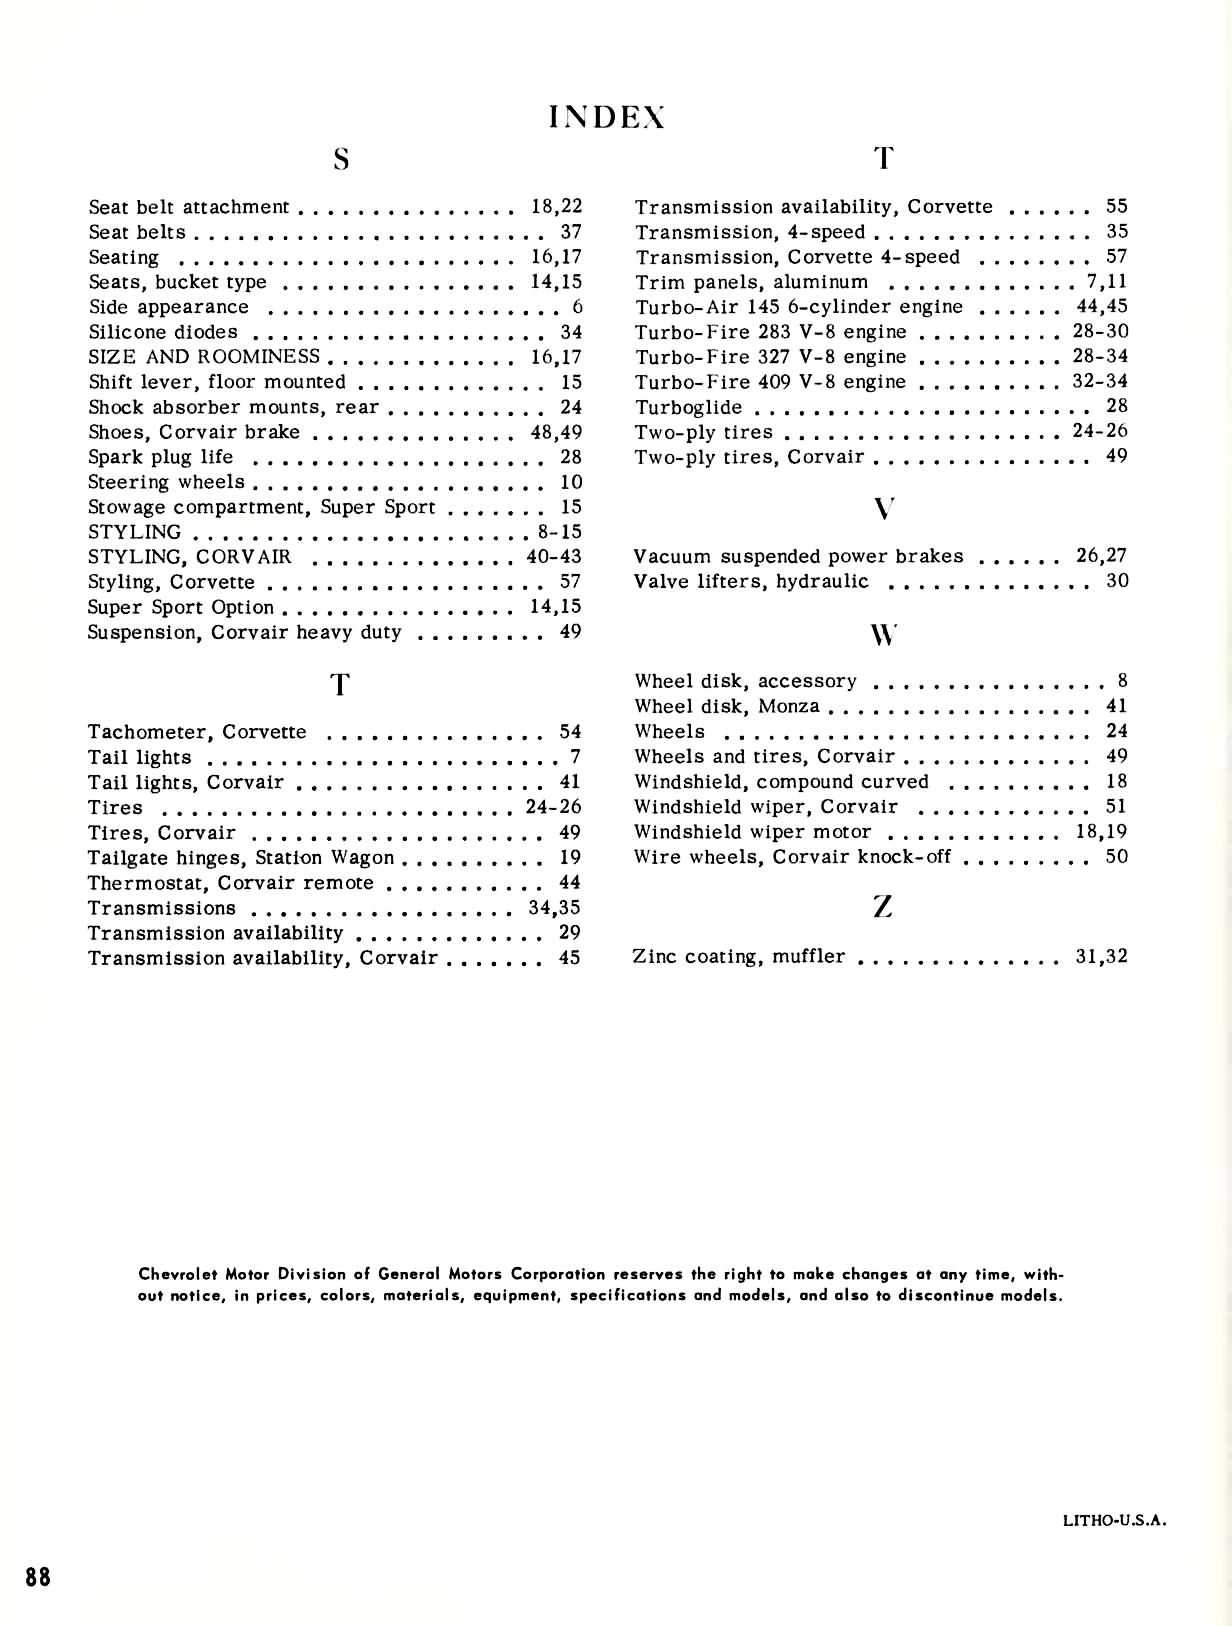 1962_Chevrolet_Engineering_Features-88